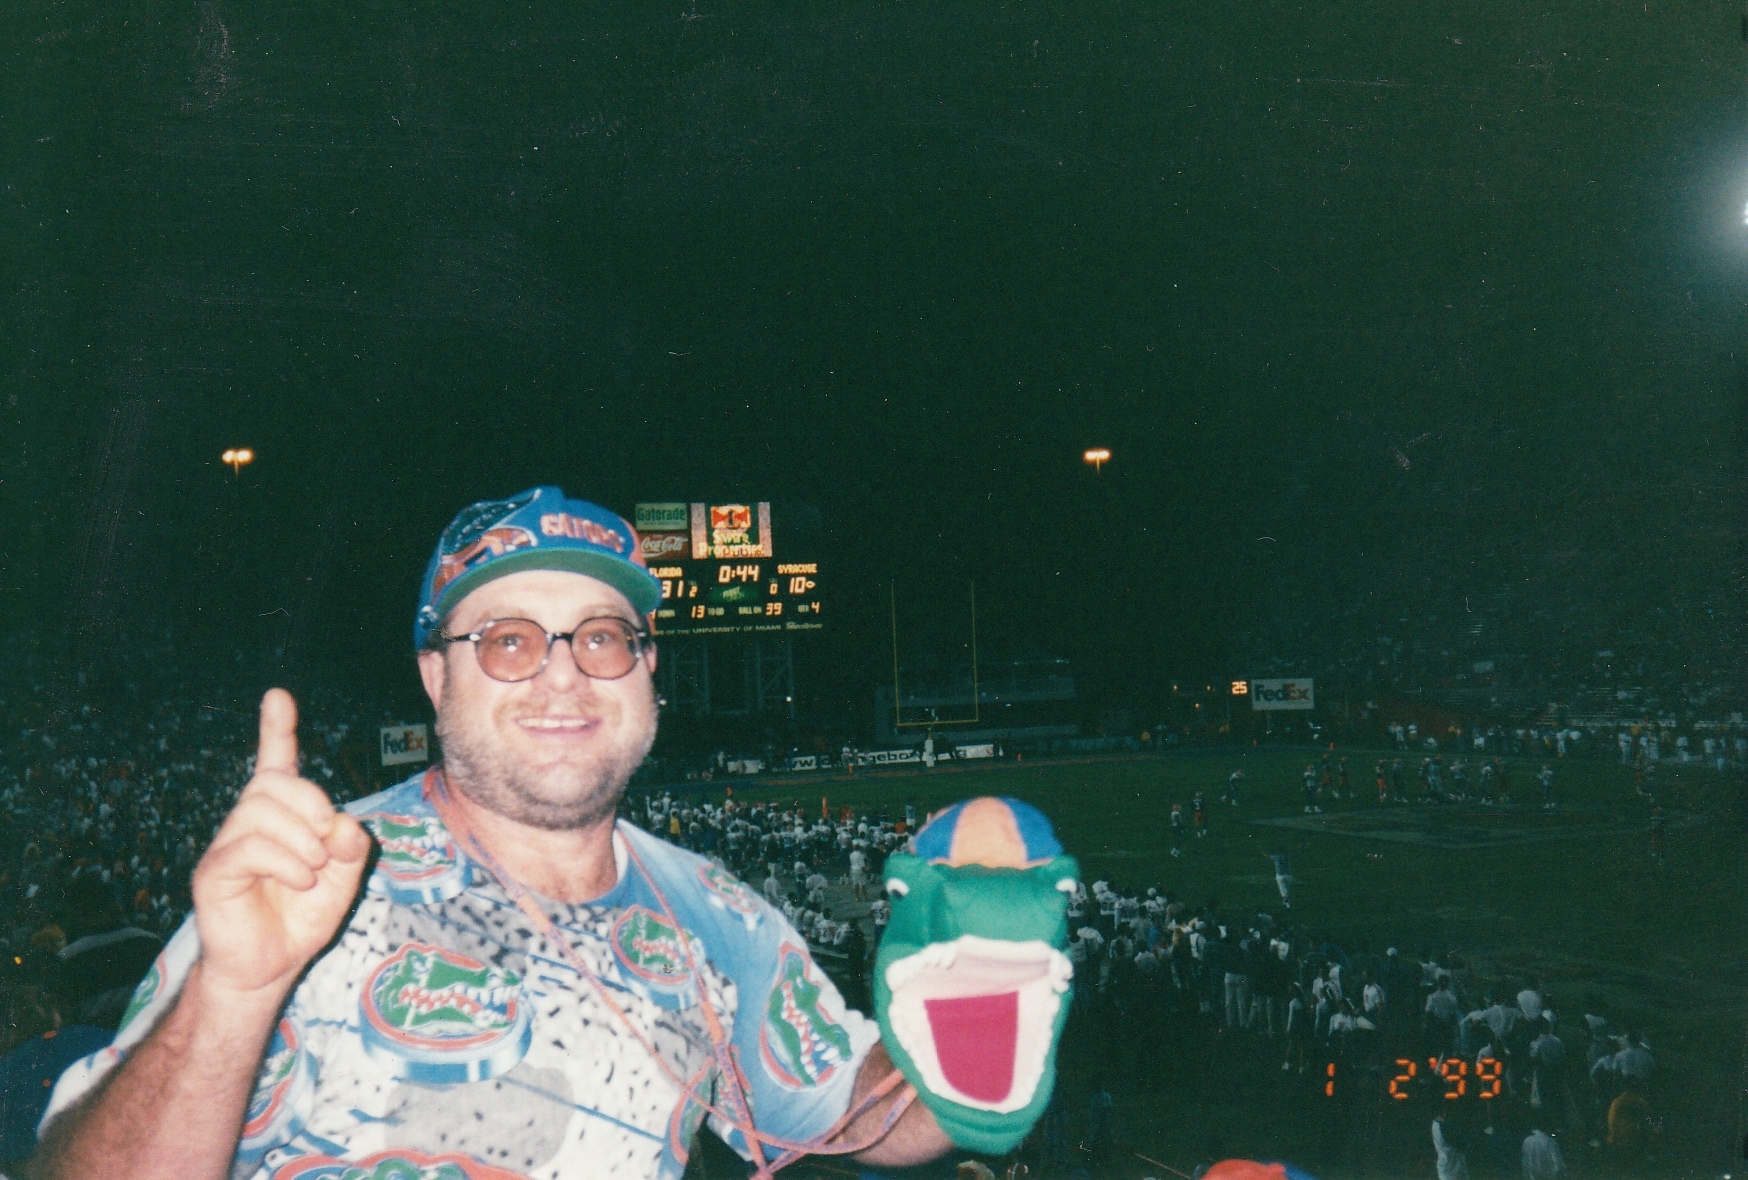 At the Orange Bowl January 2, 1999 Gators beat Syracuse 331 to 10